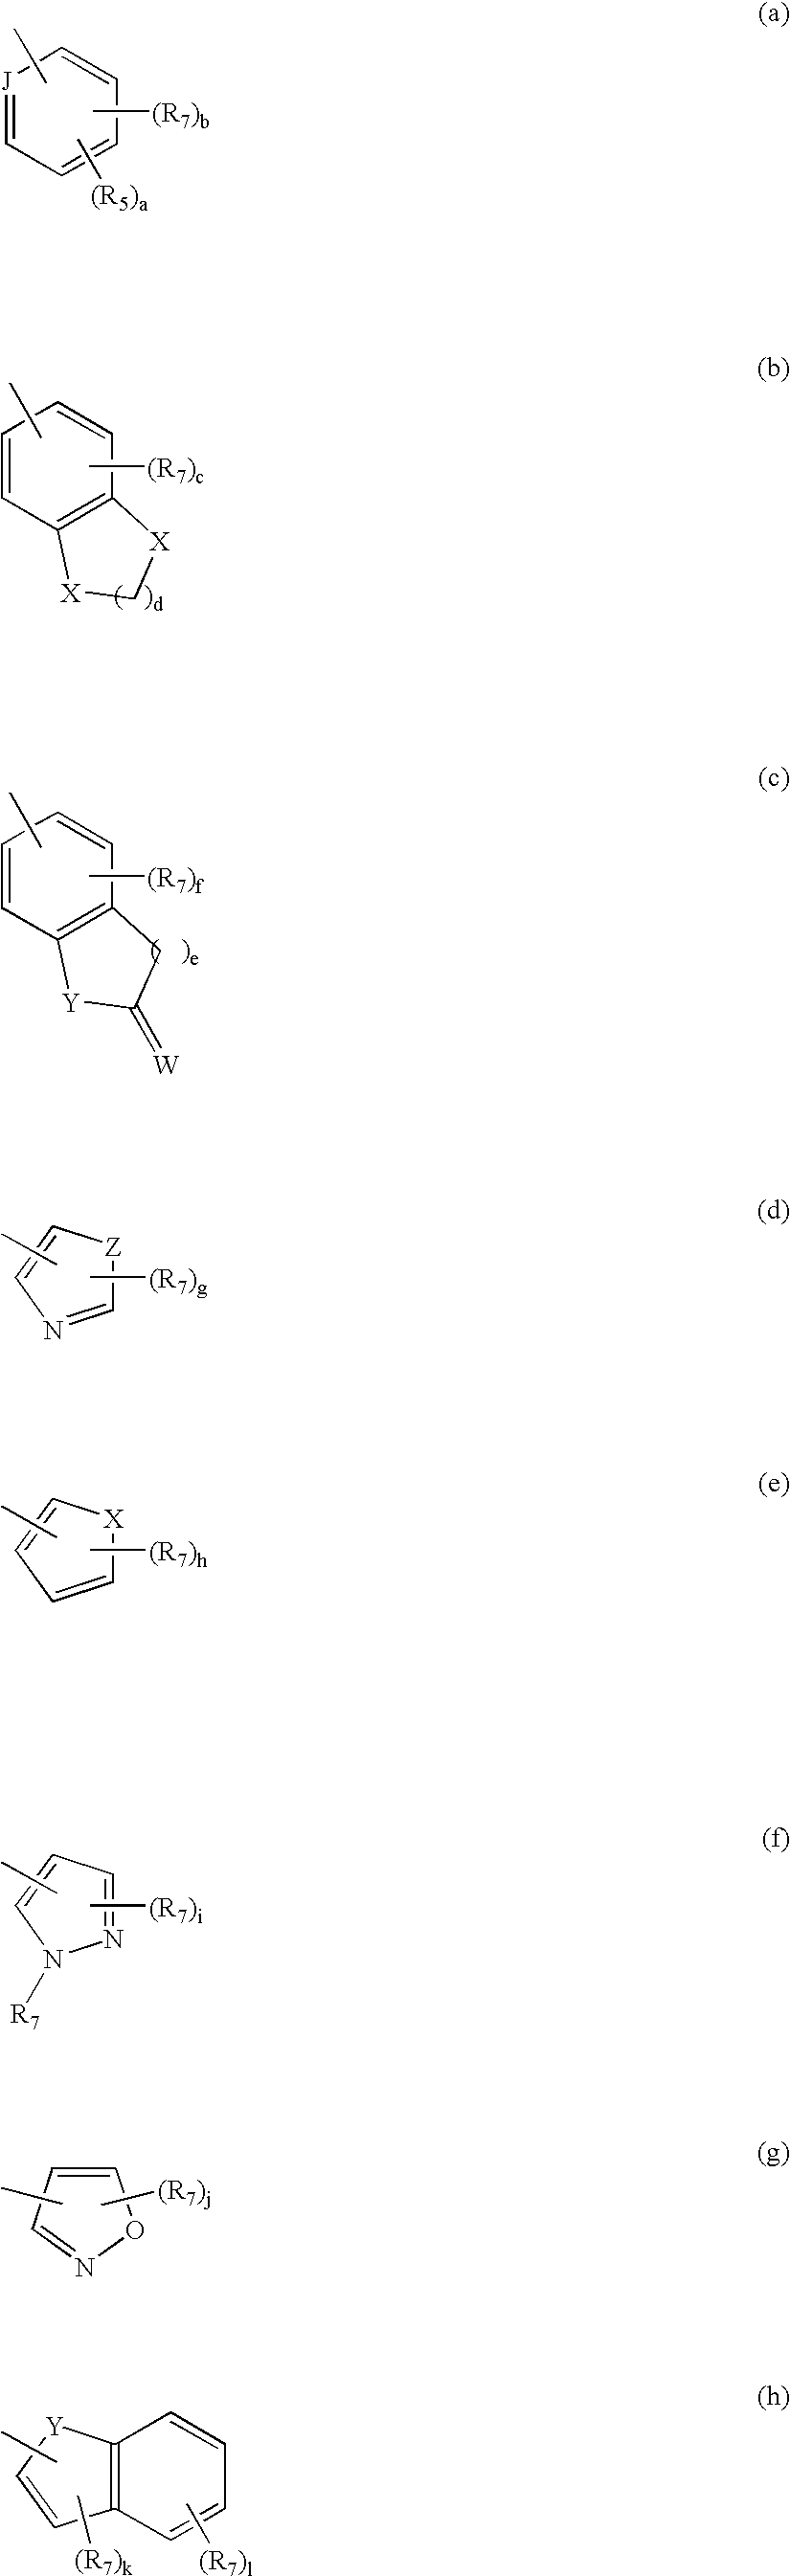 Compounds having 5-HT6 receptor affinity